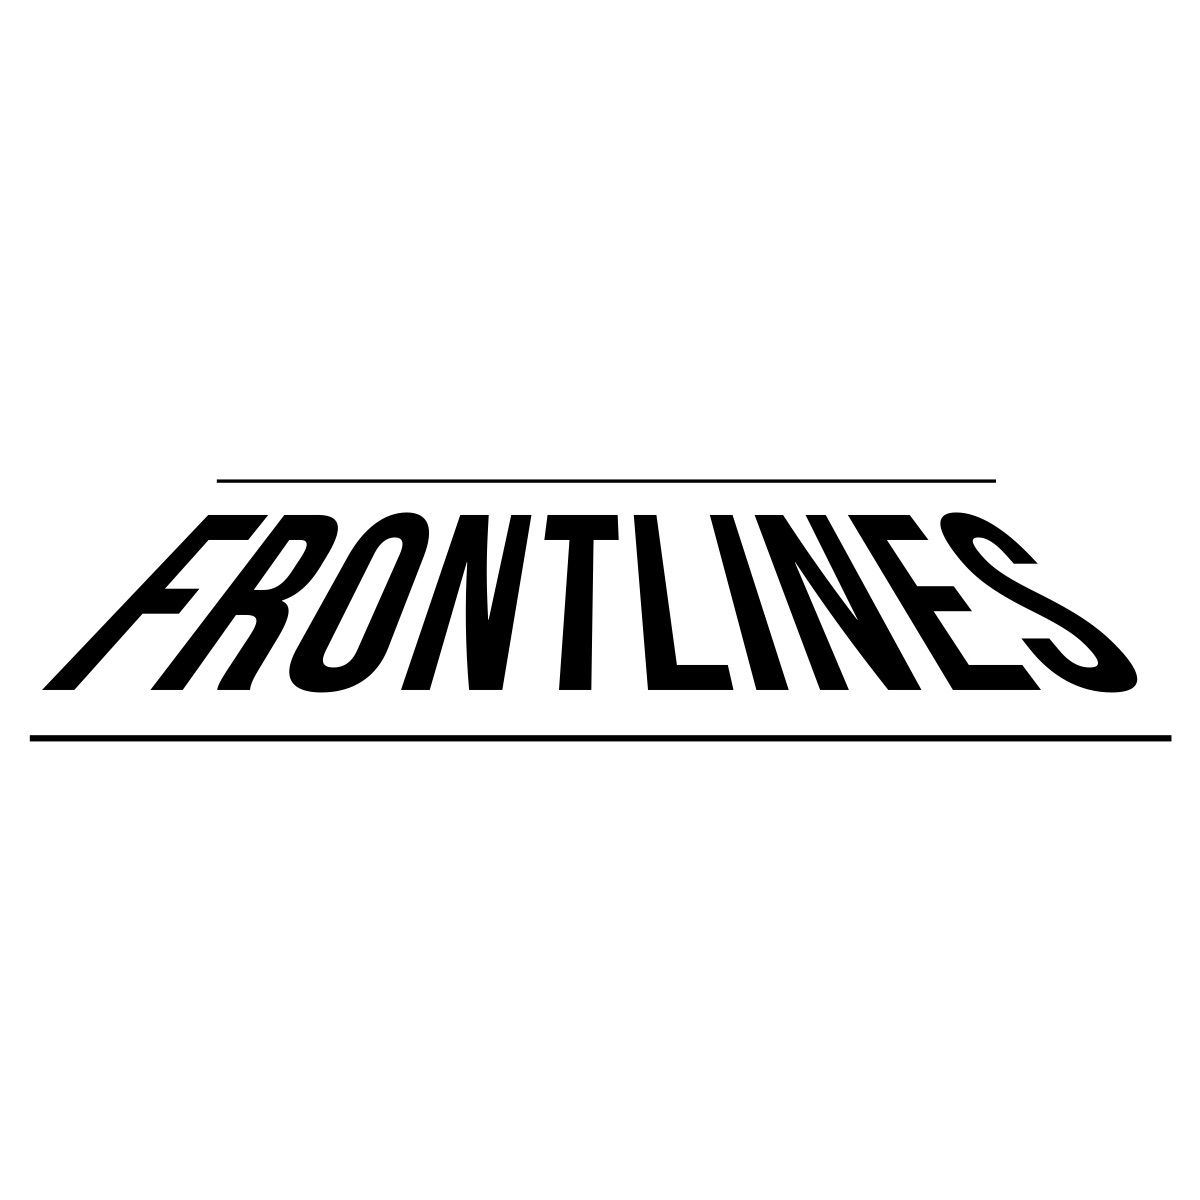 Frontlines Logo